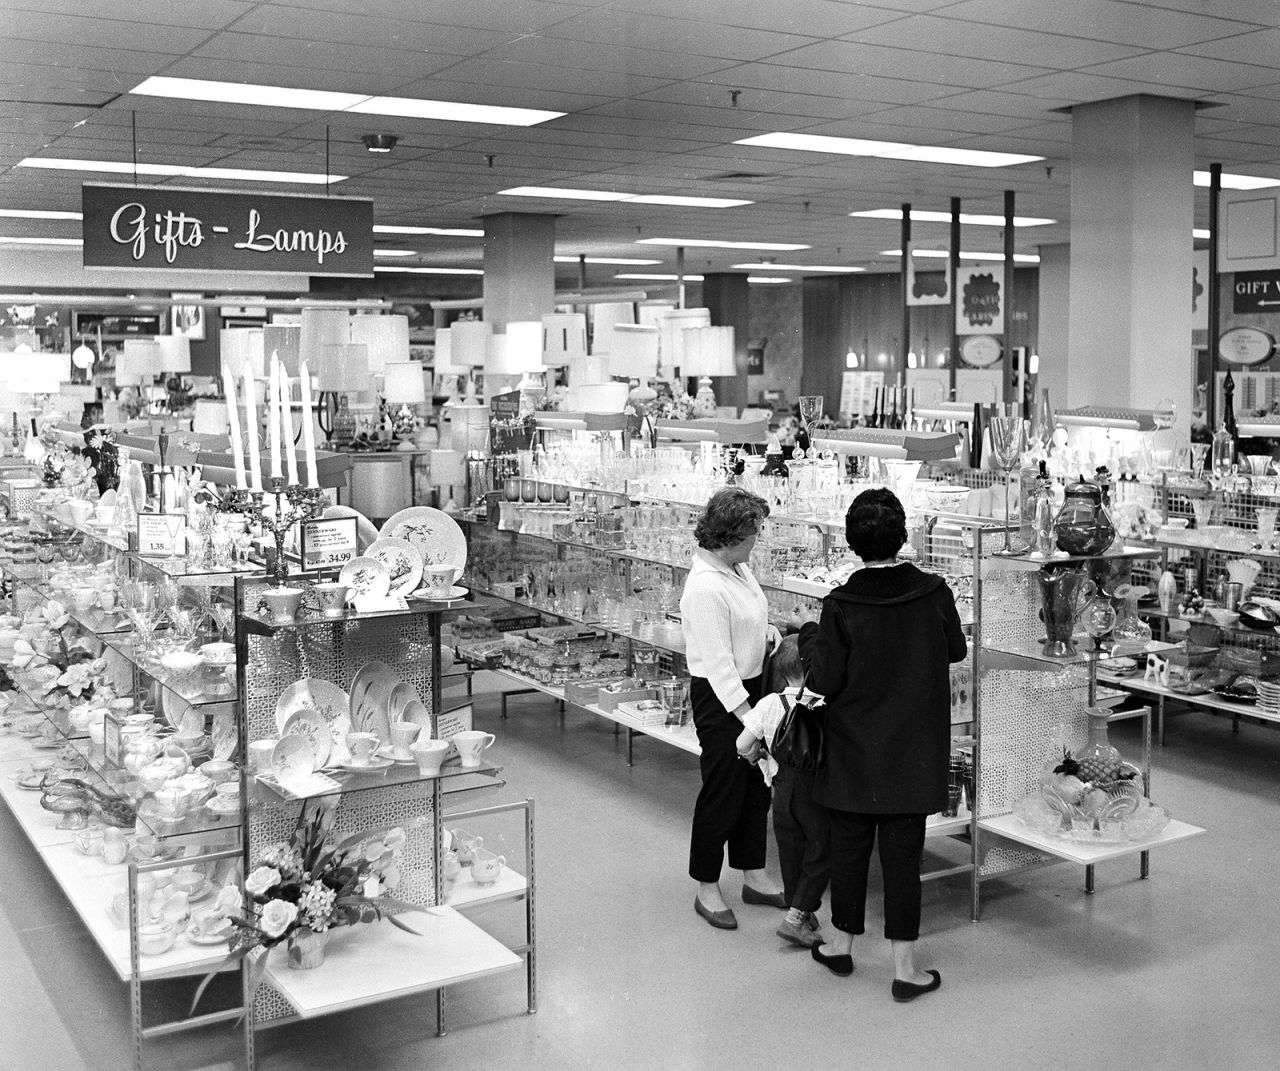 People shop inside a Sears store in Morton Grove, Illinois, in 1961.